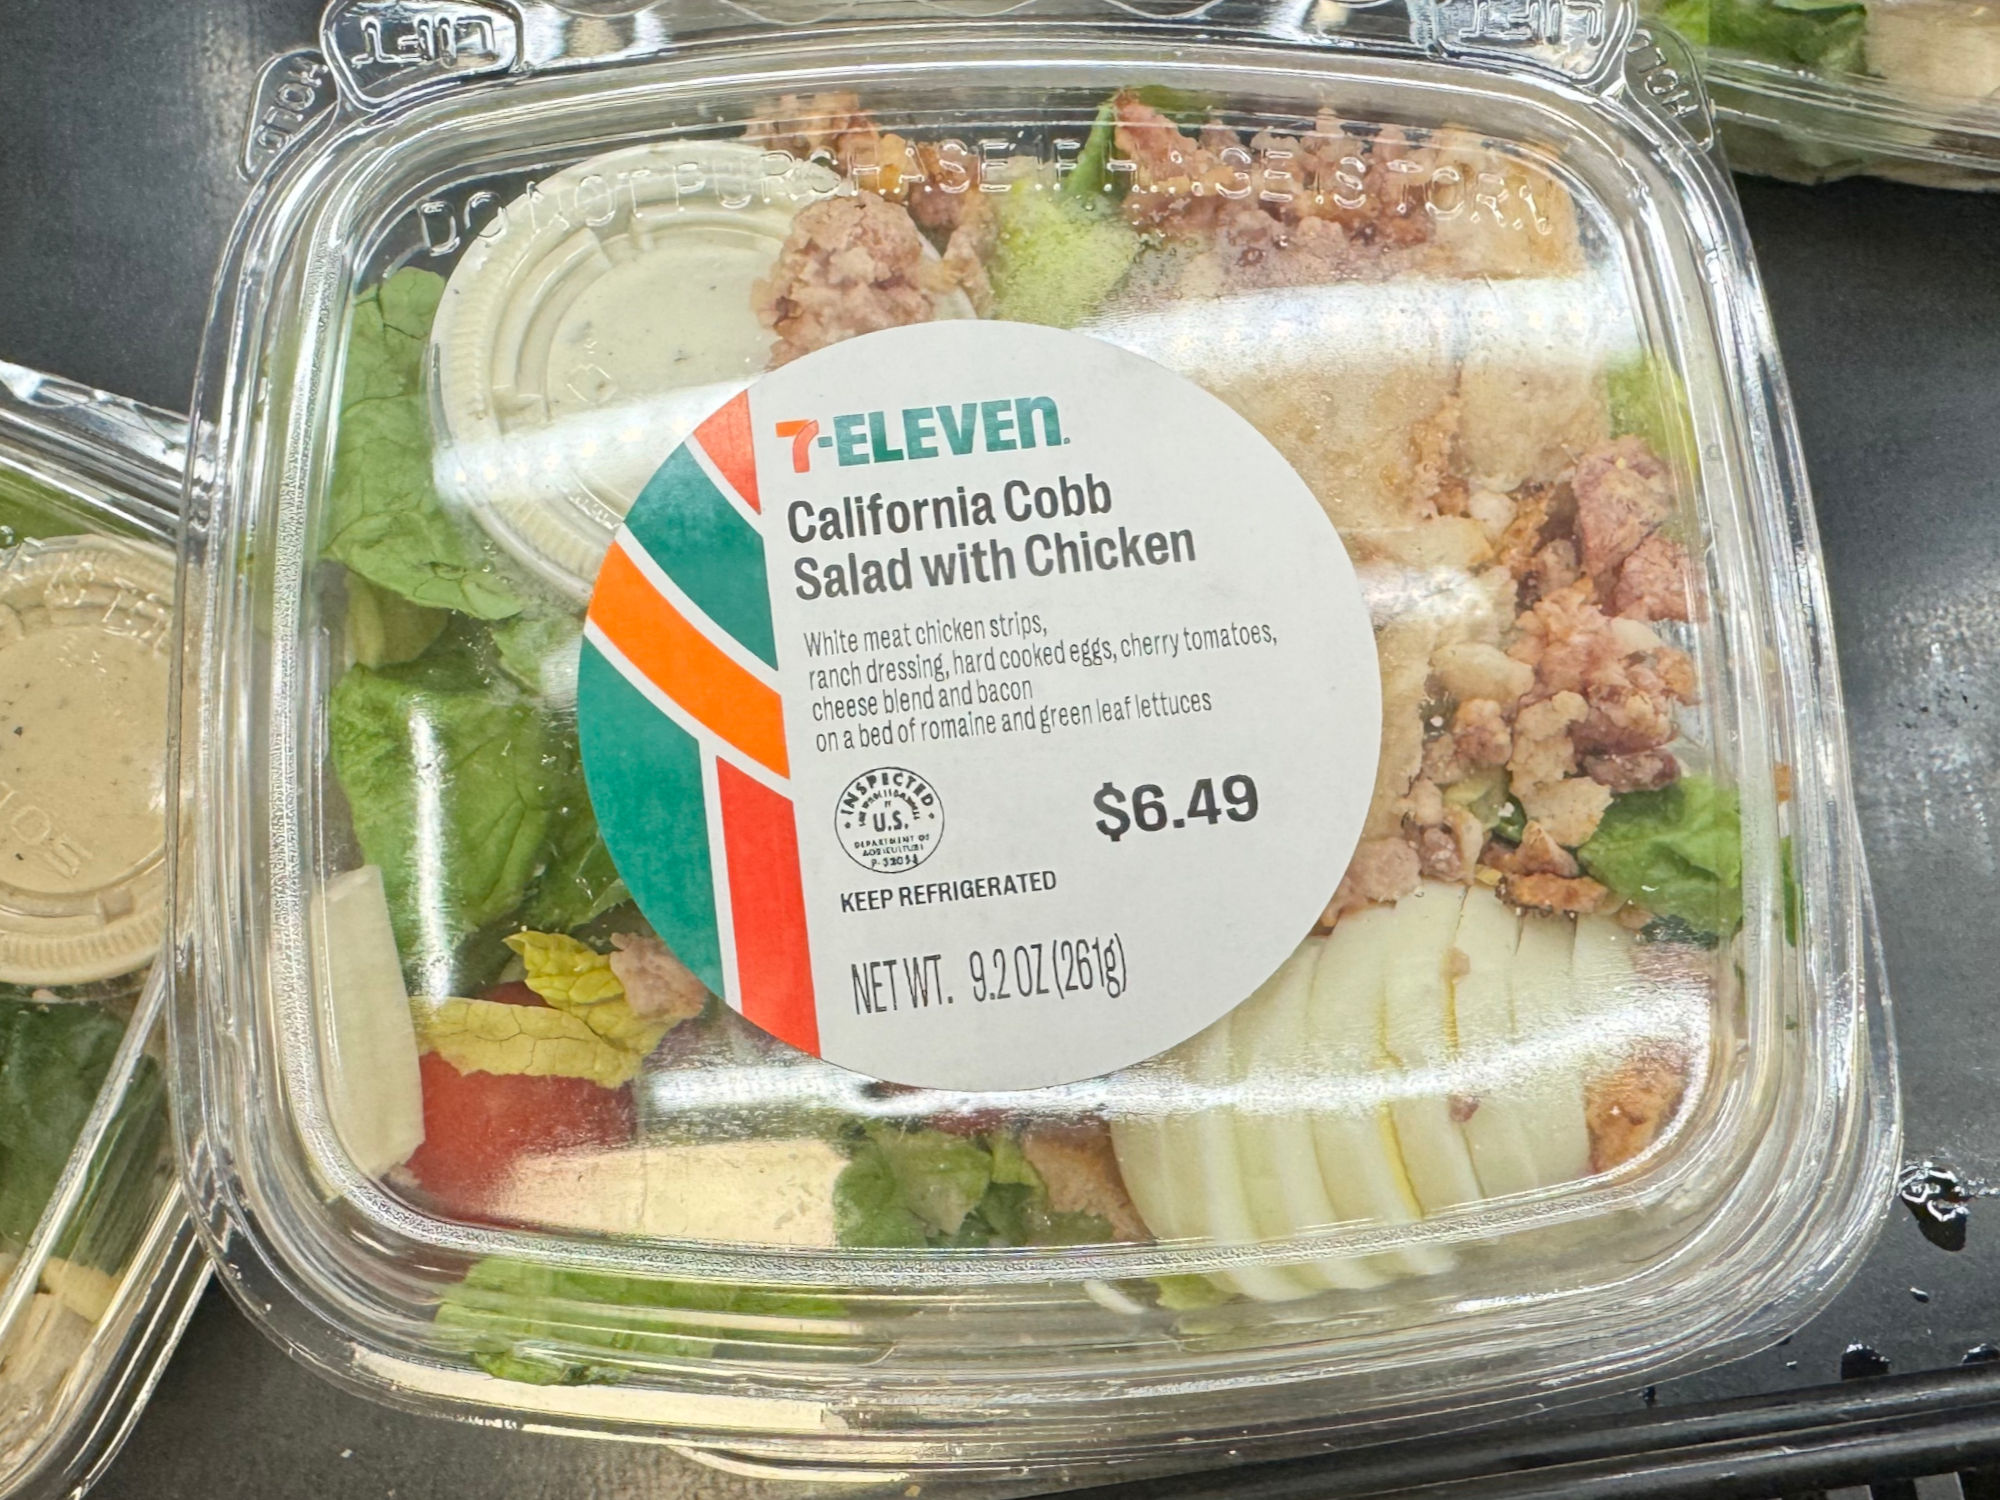 7-Eleven California Cobb Salad with Chicken